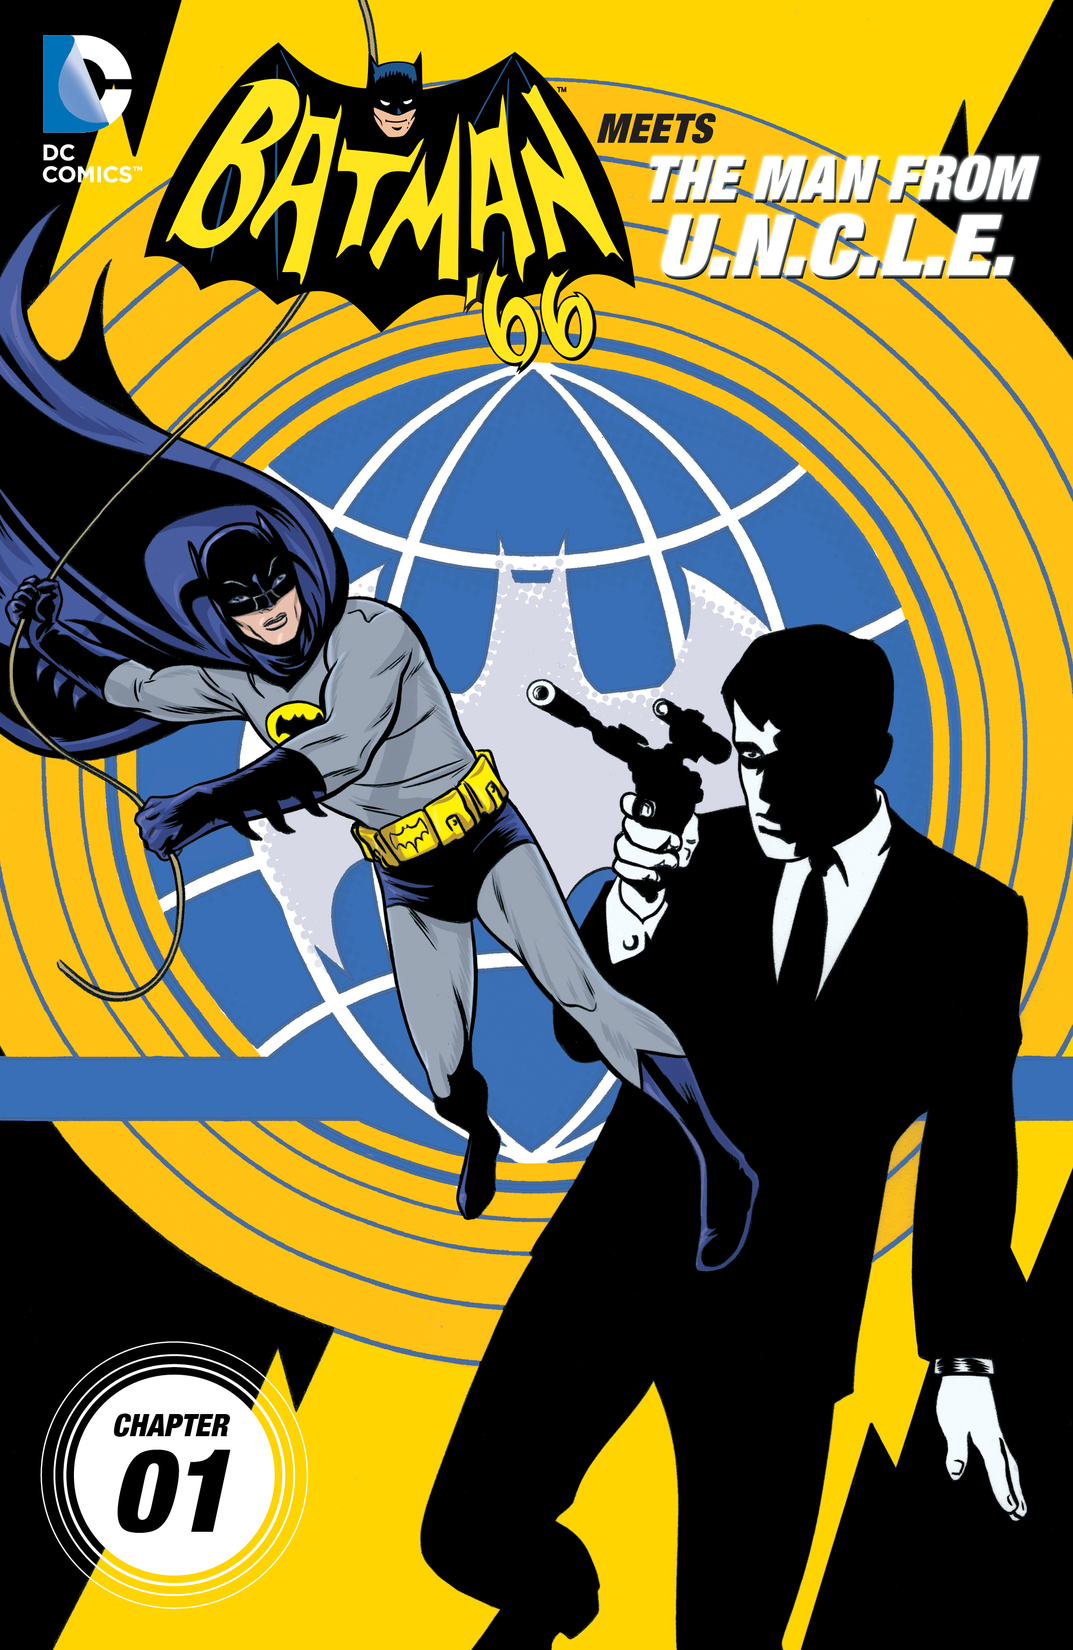 Batman '66 Meets The Man From U.N.C.L.E. #1 preview images